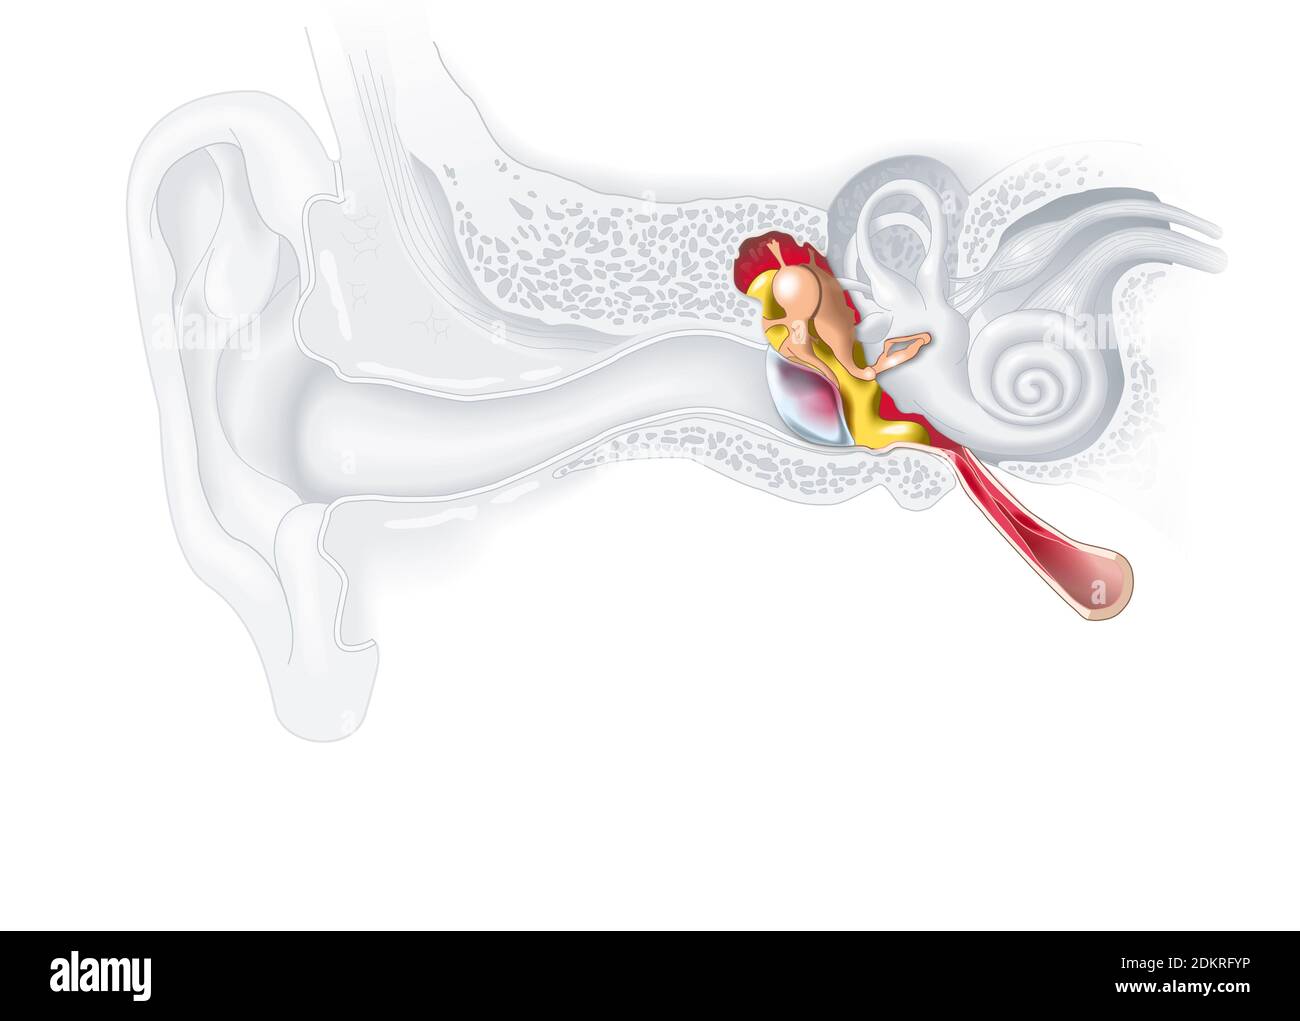 Medizinisch Illustration zeigt Entzündung des Mittelohrs, Otitis media Stockfoto